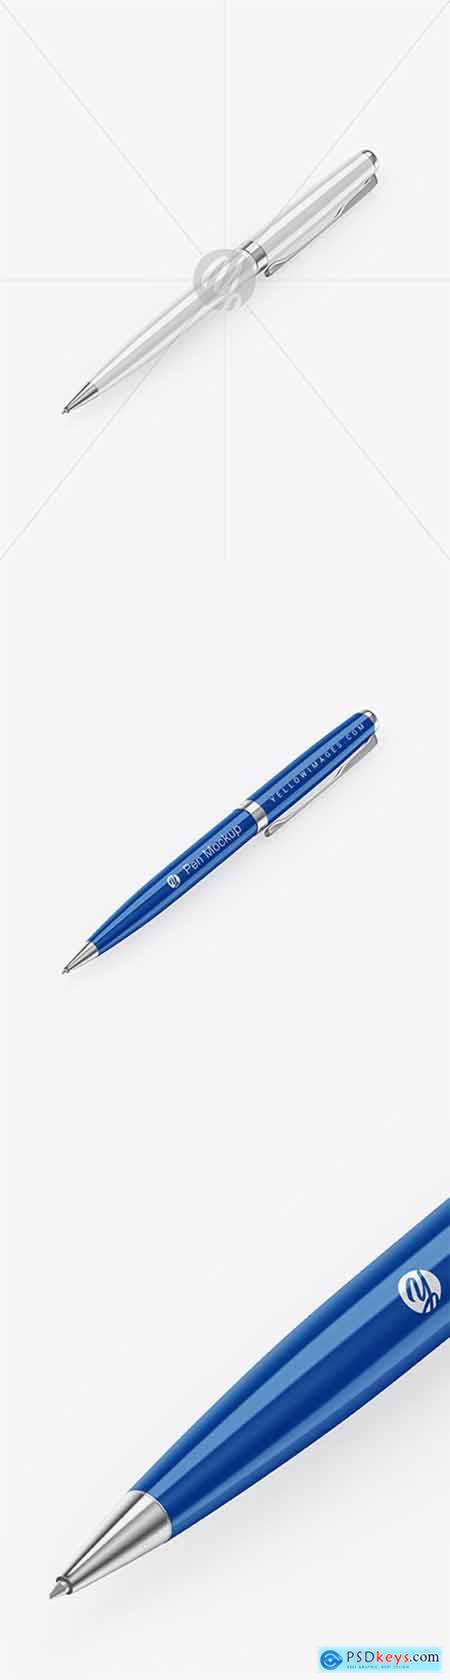 Glossy Pen w- Metallic Finish Mockup 65958